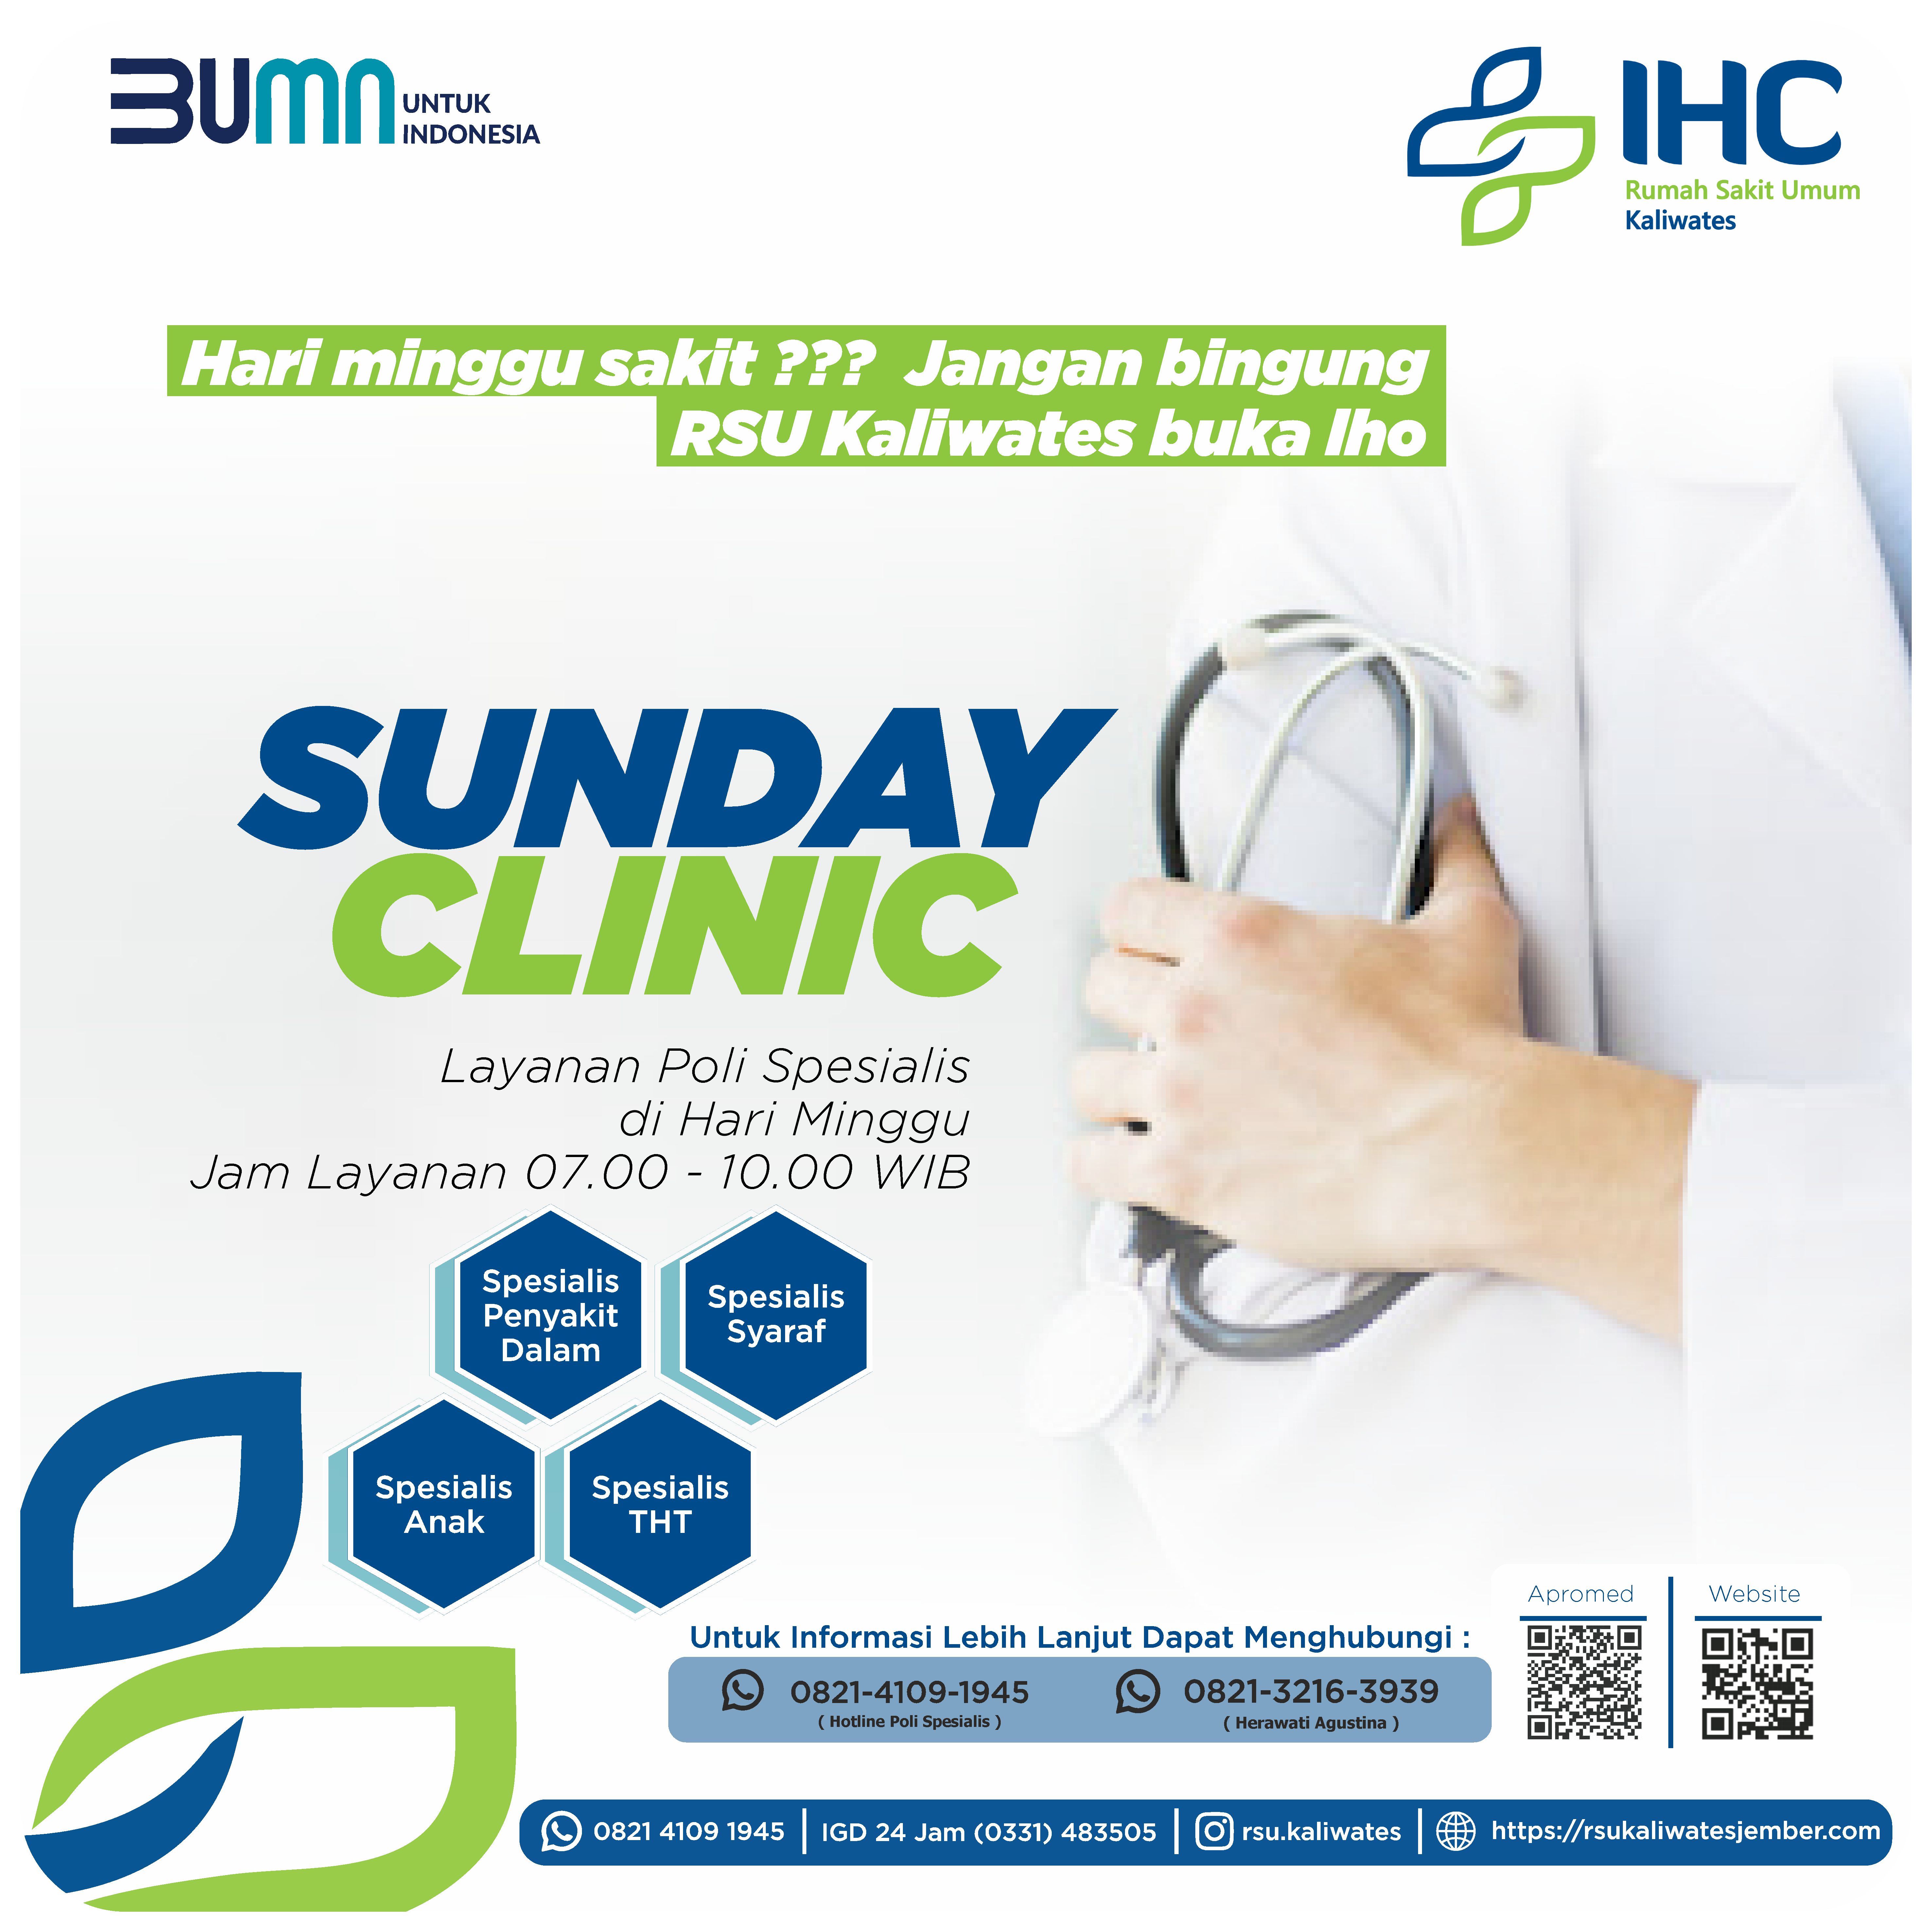 Sunday clinic